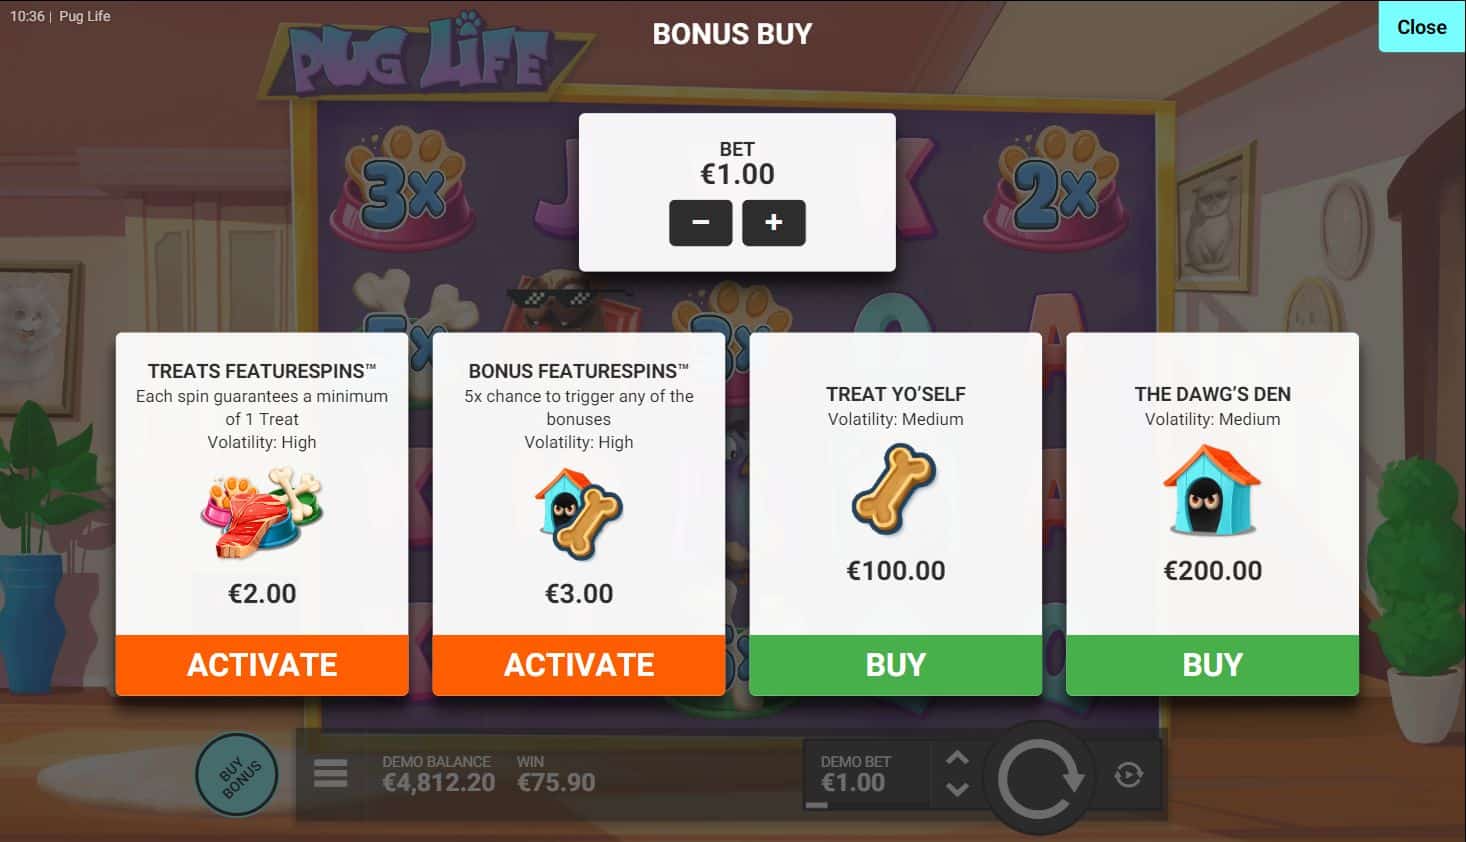 Pug Life Bonus Buy